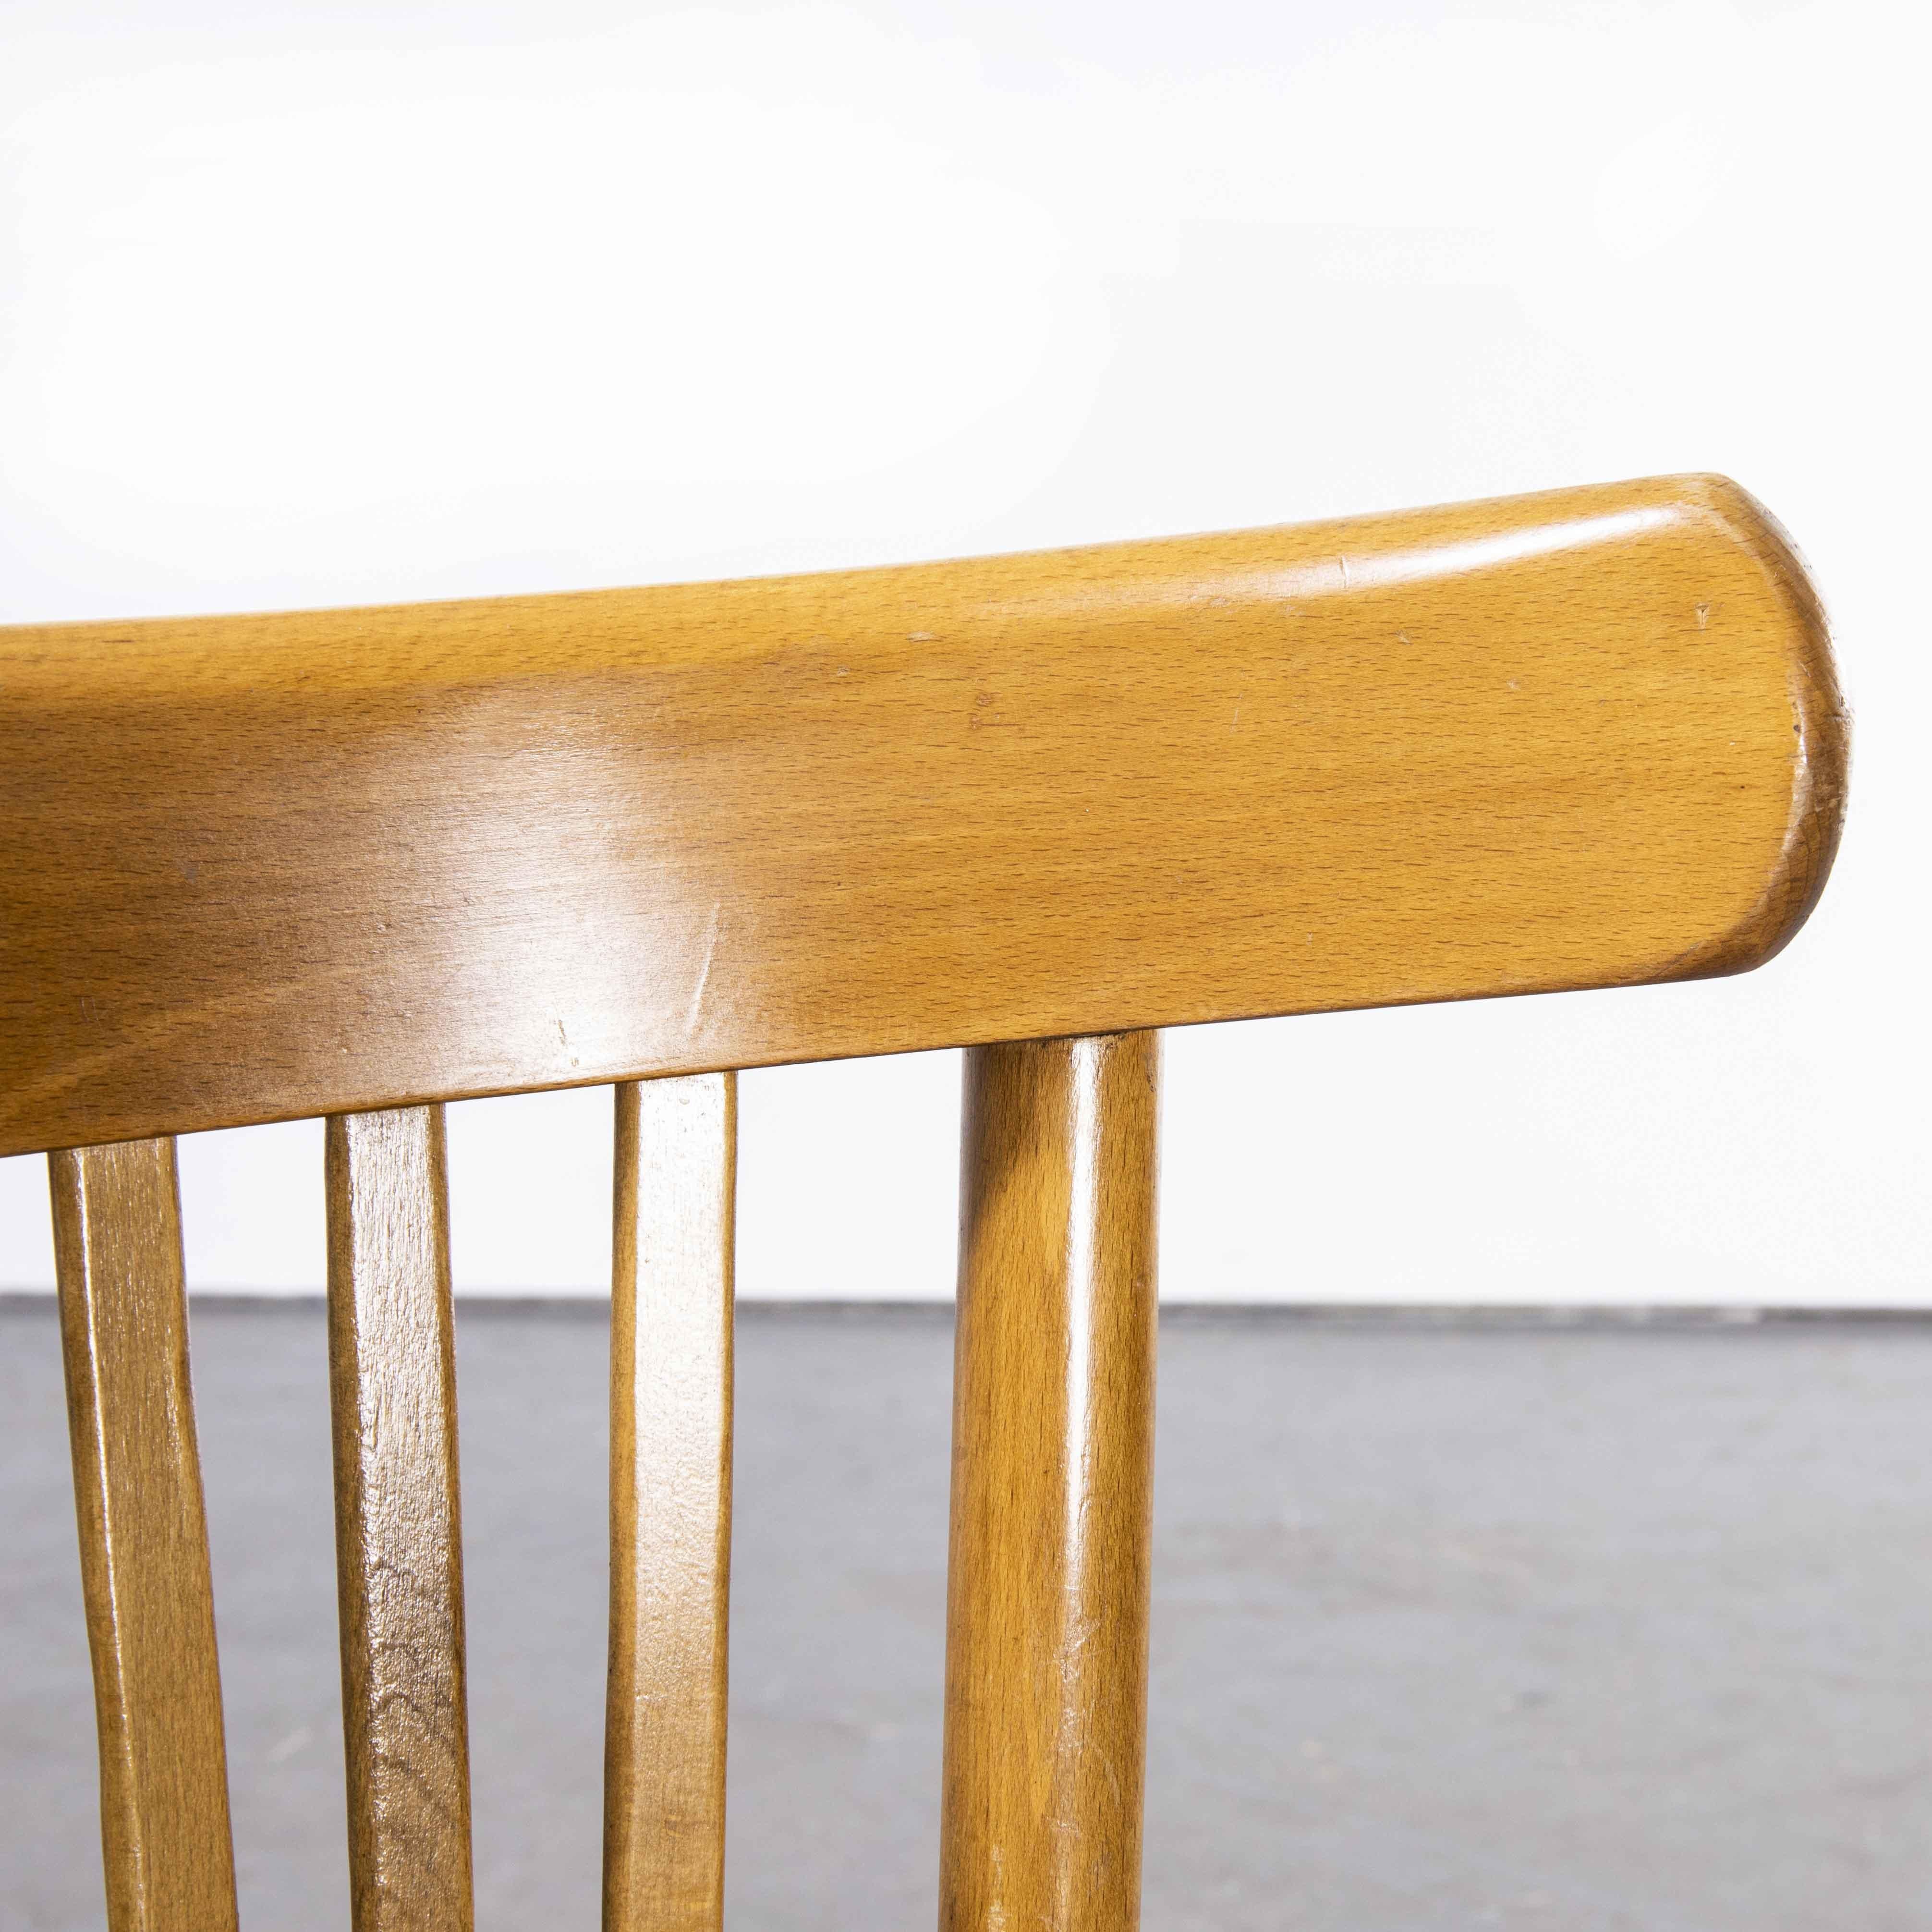 1950’s Baumann bentwood bistro dining chair – Set of six (Model 1362)

1940’s Baumann bentwood bistro dining chair – Set of six. Classic Beech bistro chair made in France by the maker Baumann. Baumann is a slightly off the radar French producer